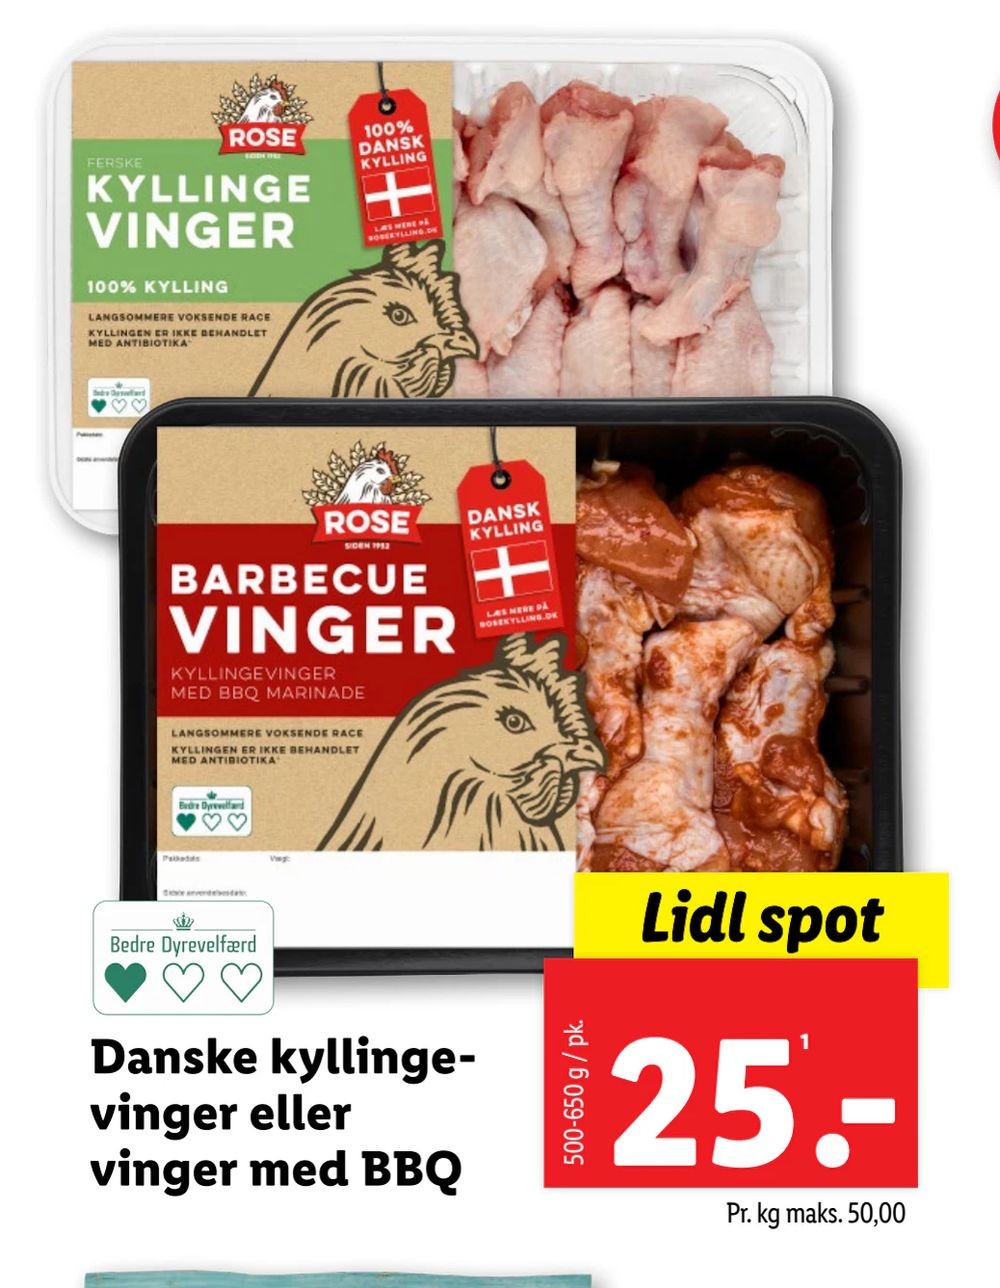 Tilbud på Danske kyllingevinger eller vinger med BBQ fra Lidl til 25 kr.